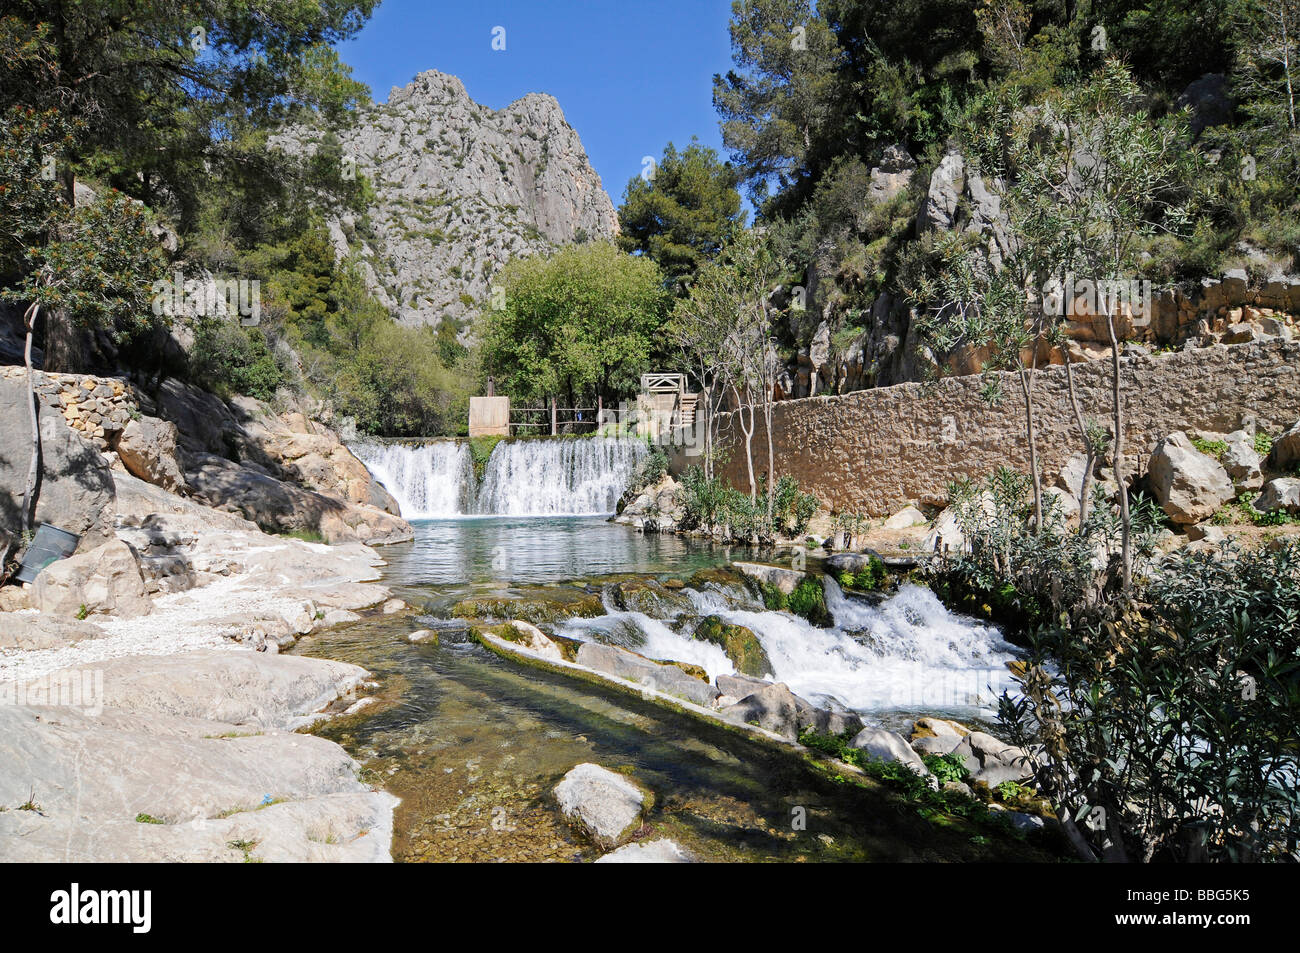 Fonts de l'Algar, Fuentes, springs, river, nature park, Callosa d'en Sarria, Costa Blanca, Alicante, Spain, Europe Stock Photo